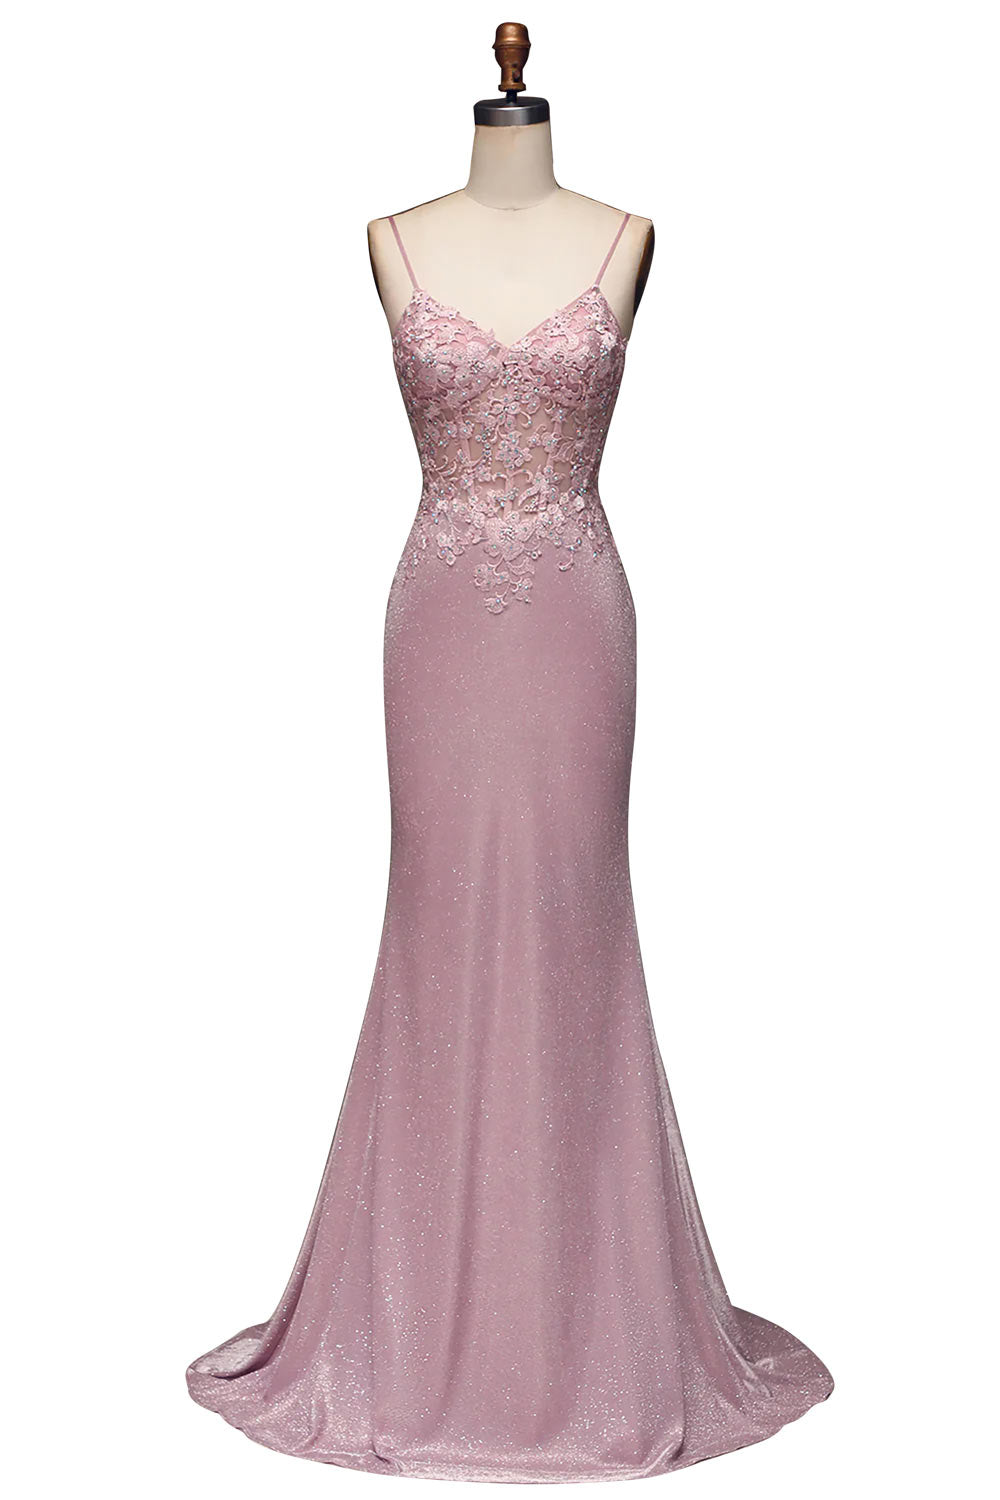 Spaghetti Straps Prom Dress, Mermaid Evening Dress, Glitter Blush Formal Dress with Beading, Custom Handmade Party Dress Prom Gown